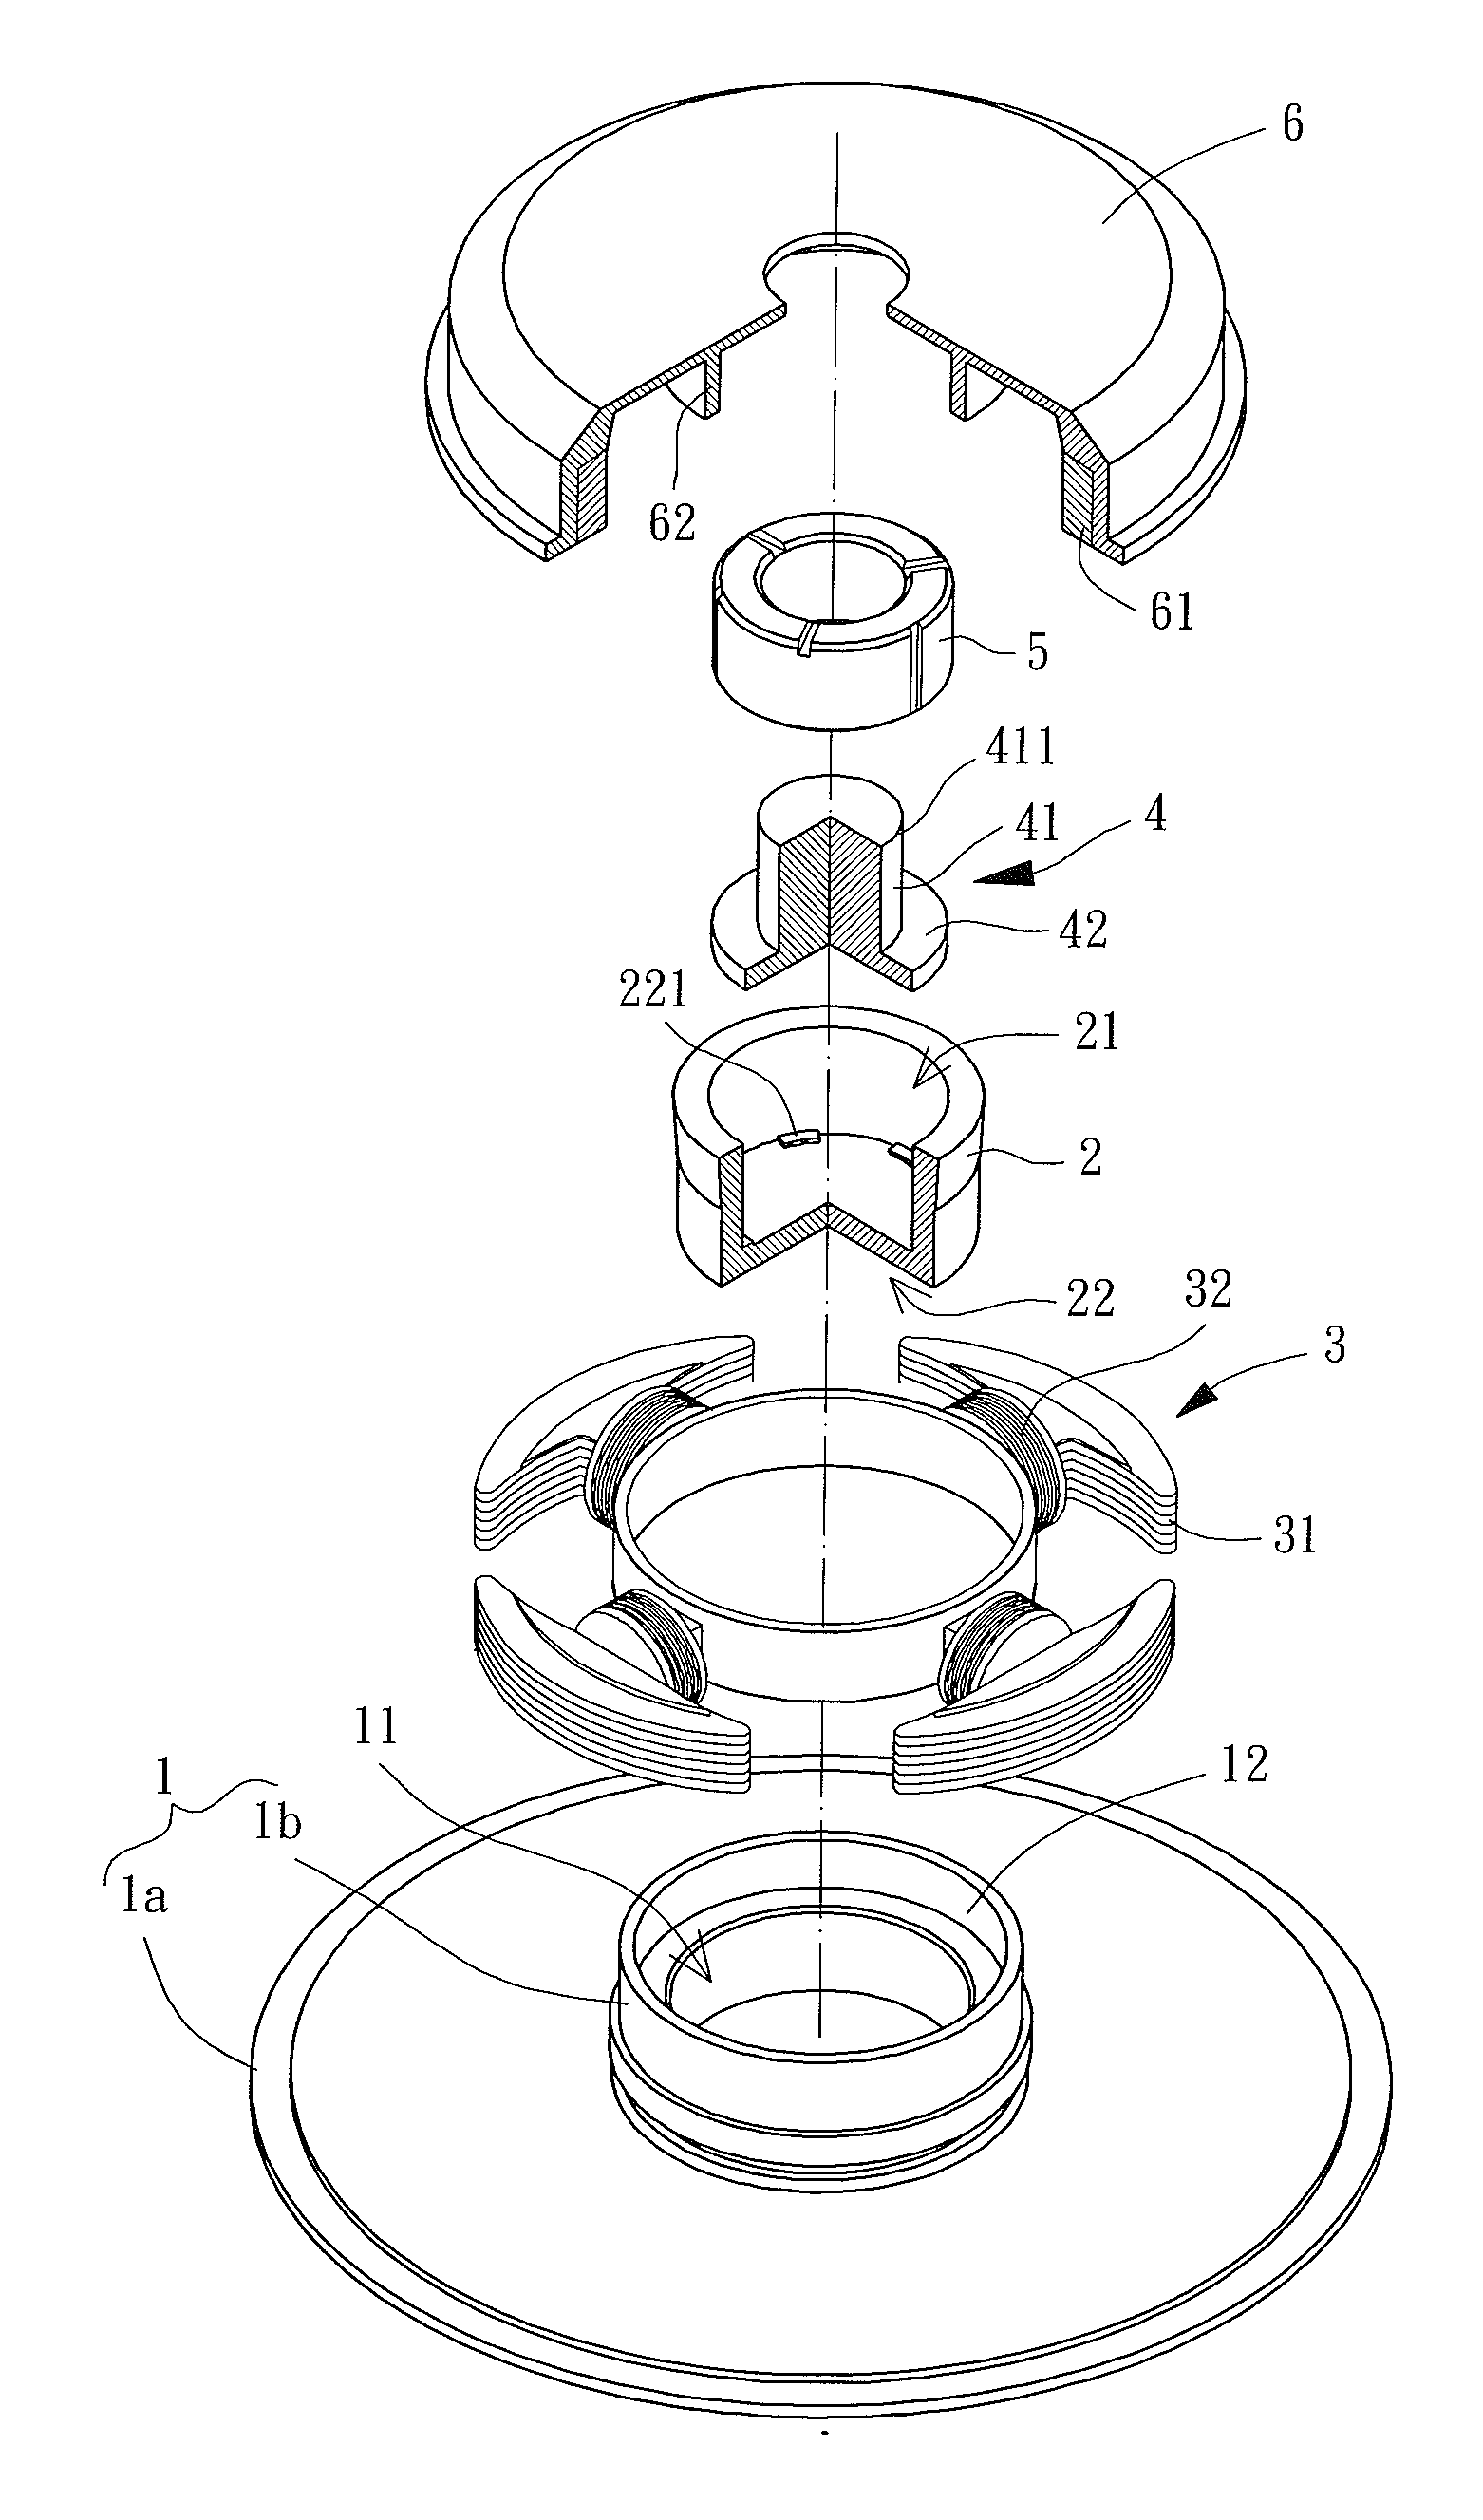 Motor with Thrust Bearing